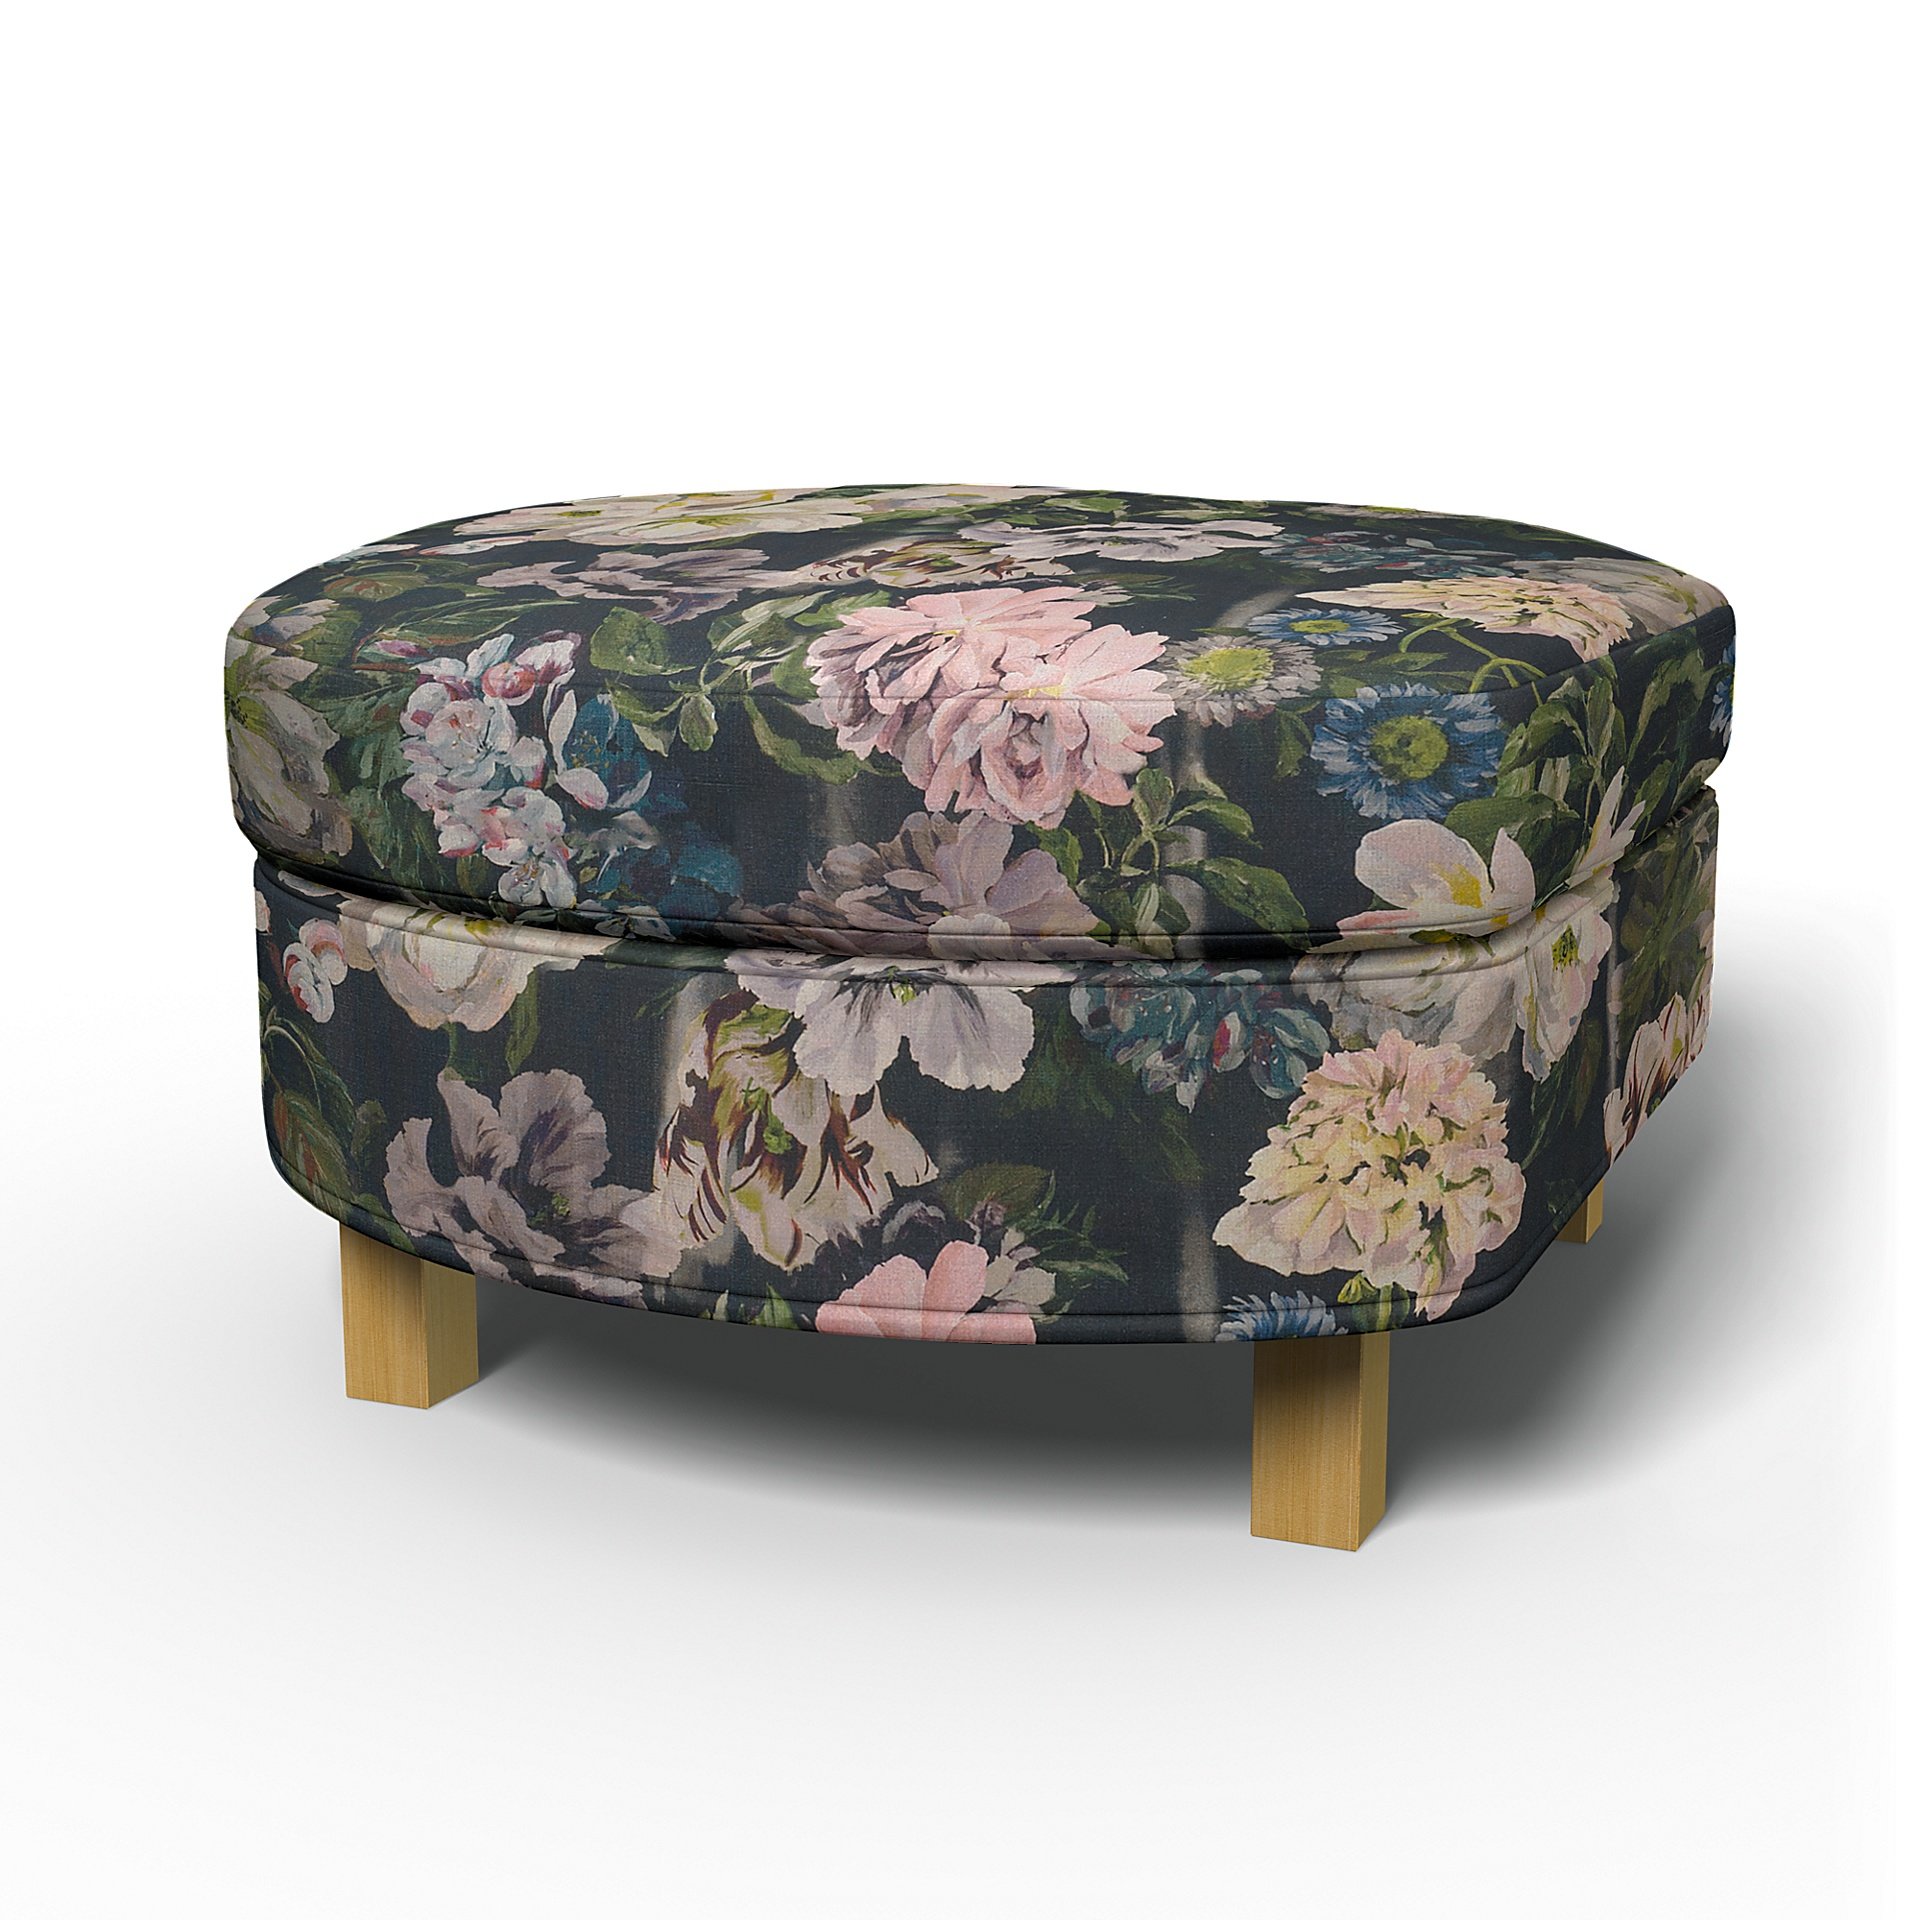 IKEA - Karlanda Footstool Cover, Delft Flower - Graphite, Linen - Bemz